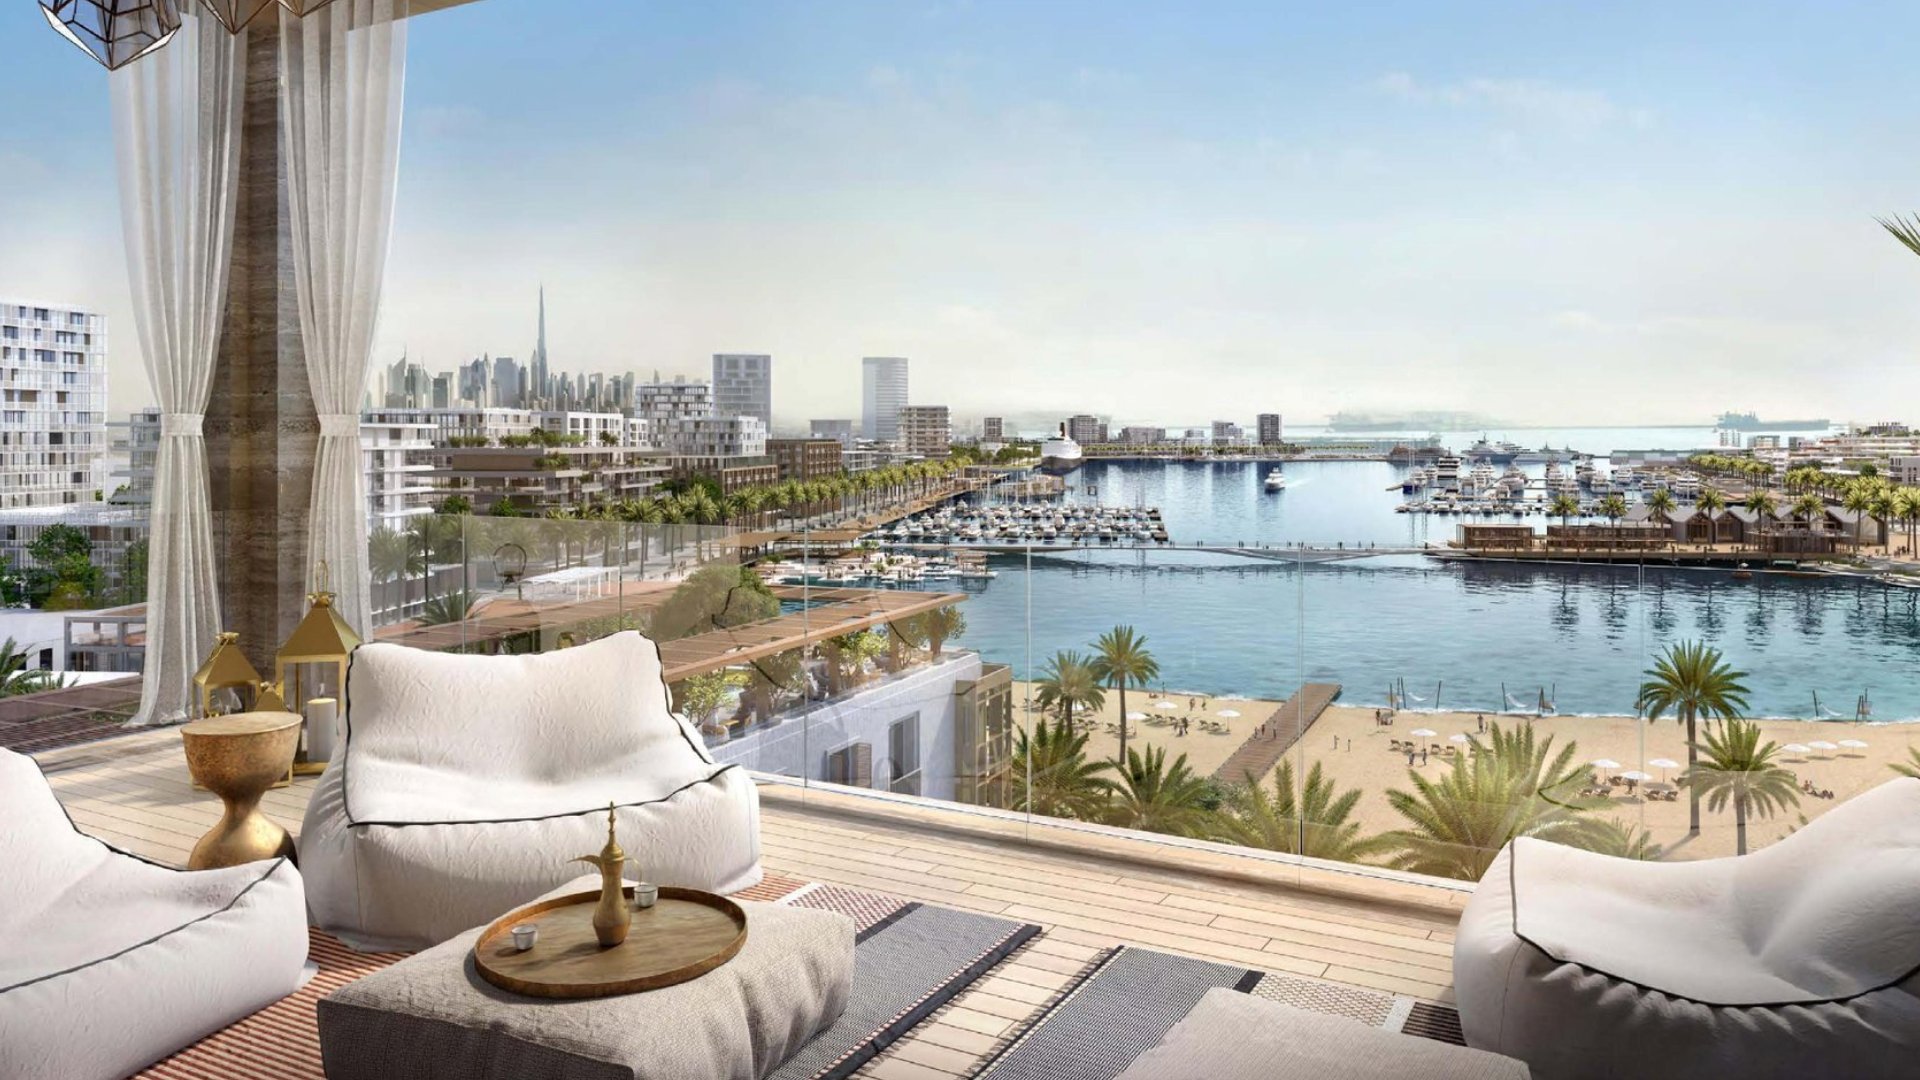 Apartment for sale in Mina Rashid (Port Rashid), Dubai, UAE, 2 bedrooms, 111 m², No. 24958 – photo 2